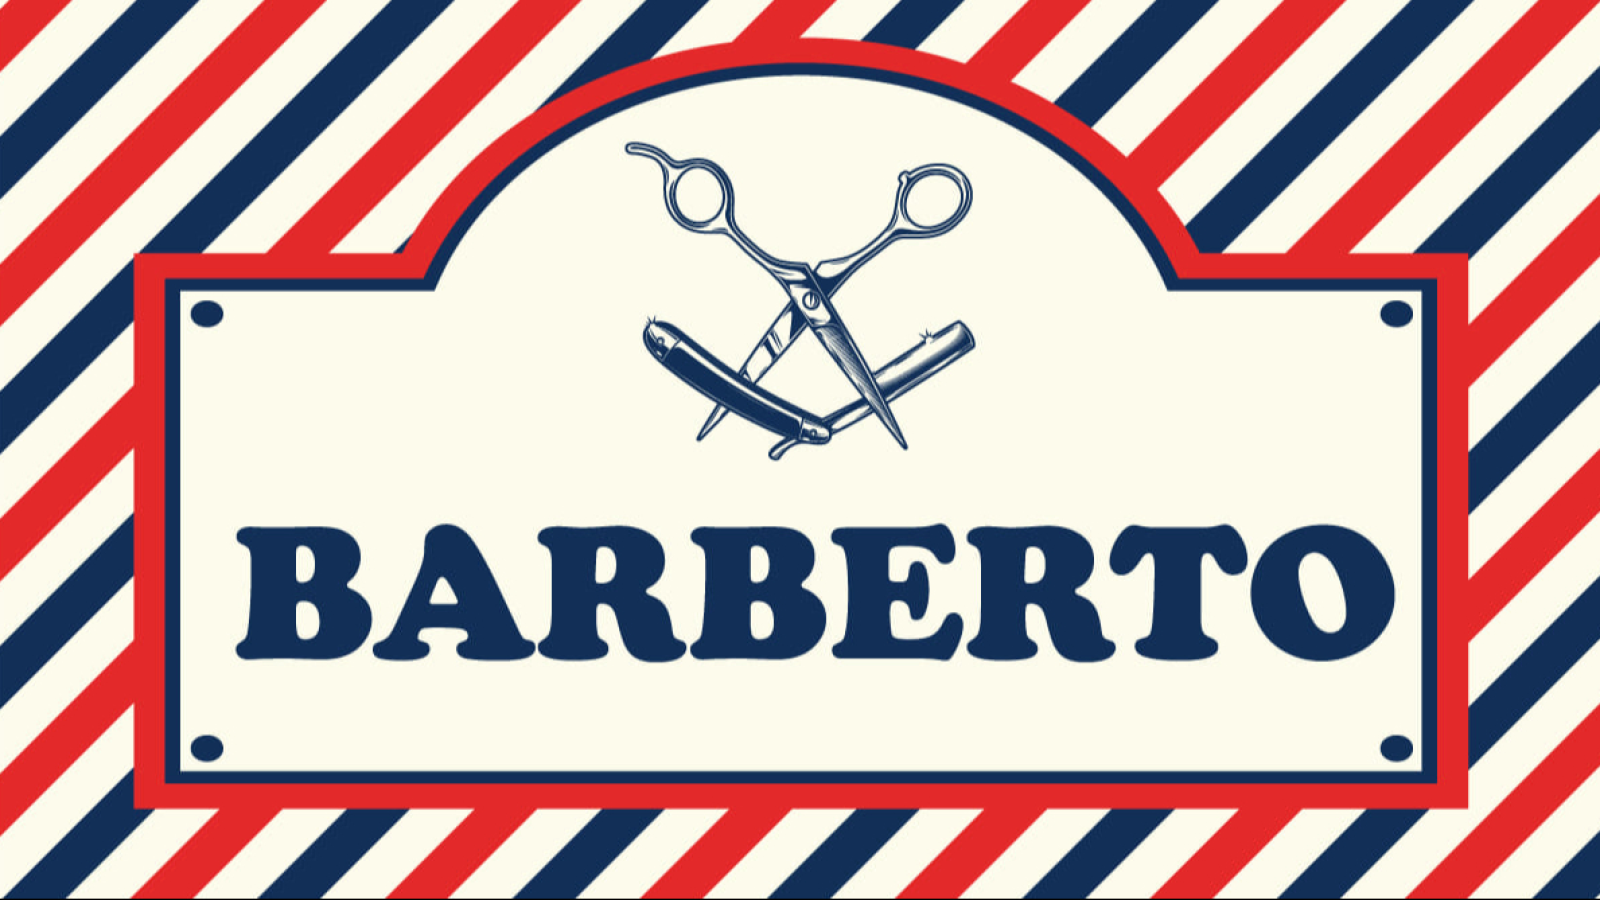 Barberto Barber Shop